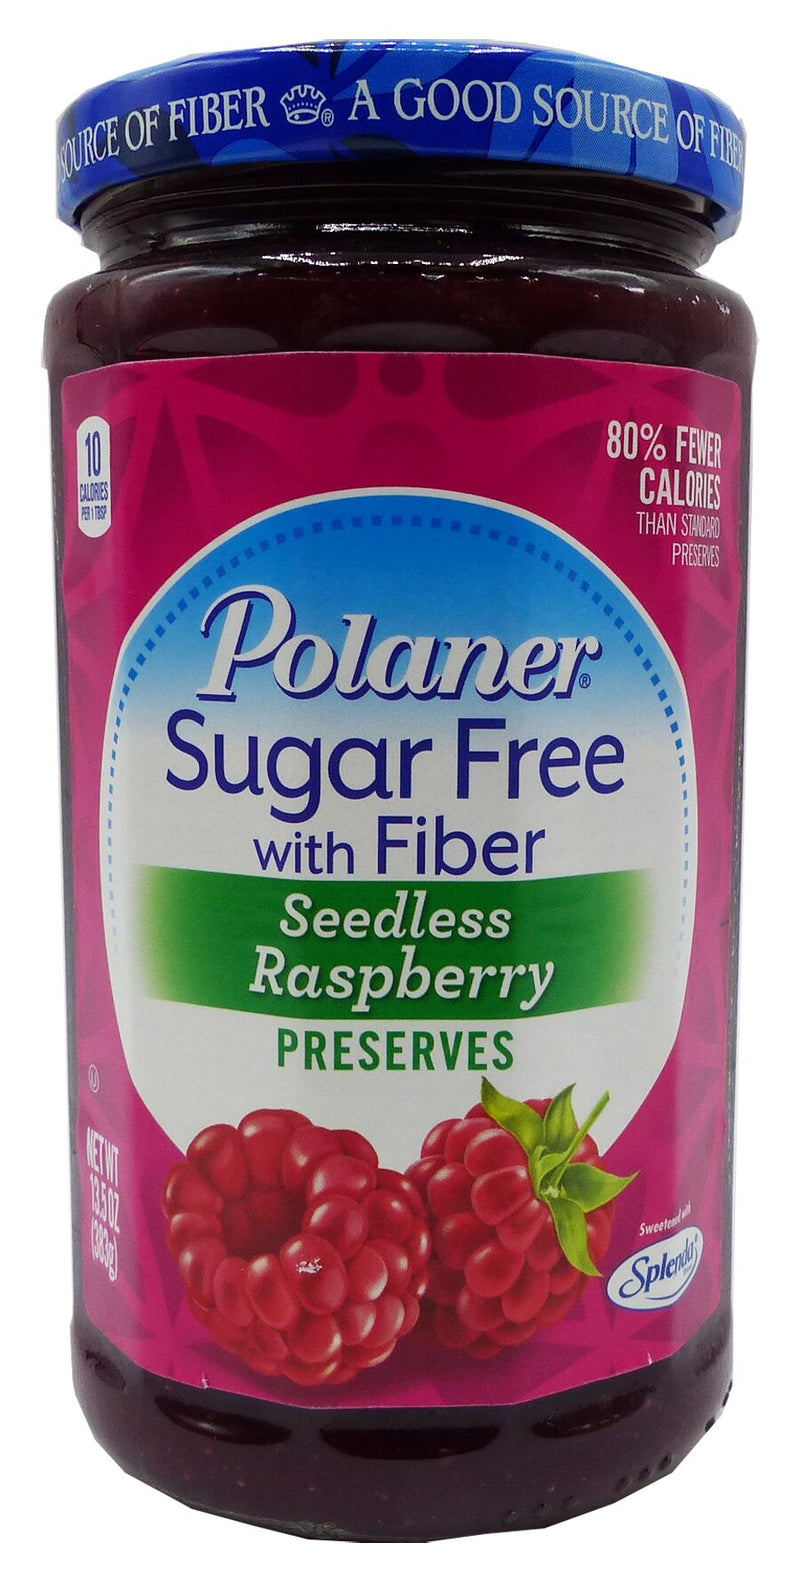 Polaner Sugar Free Preserves with Fiber